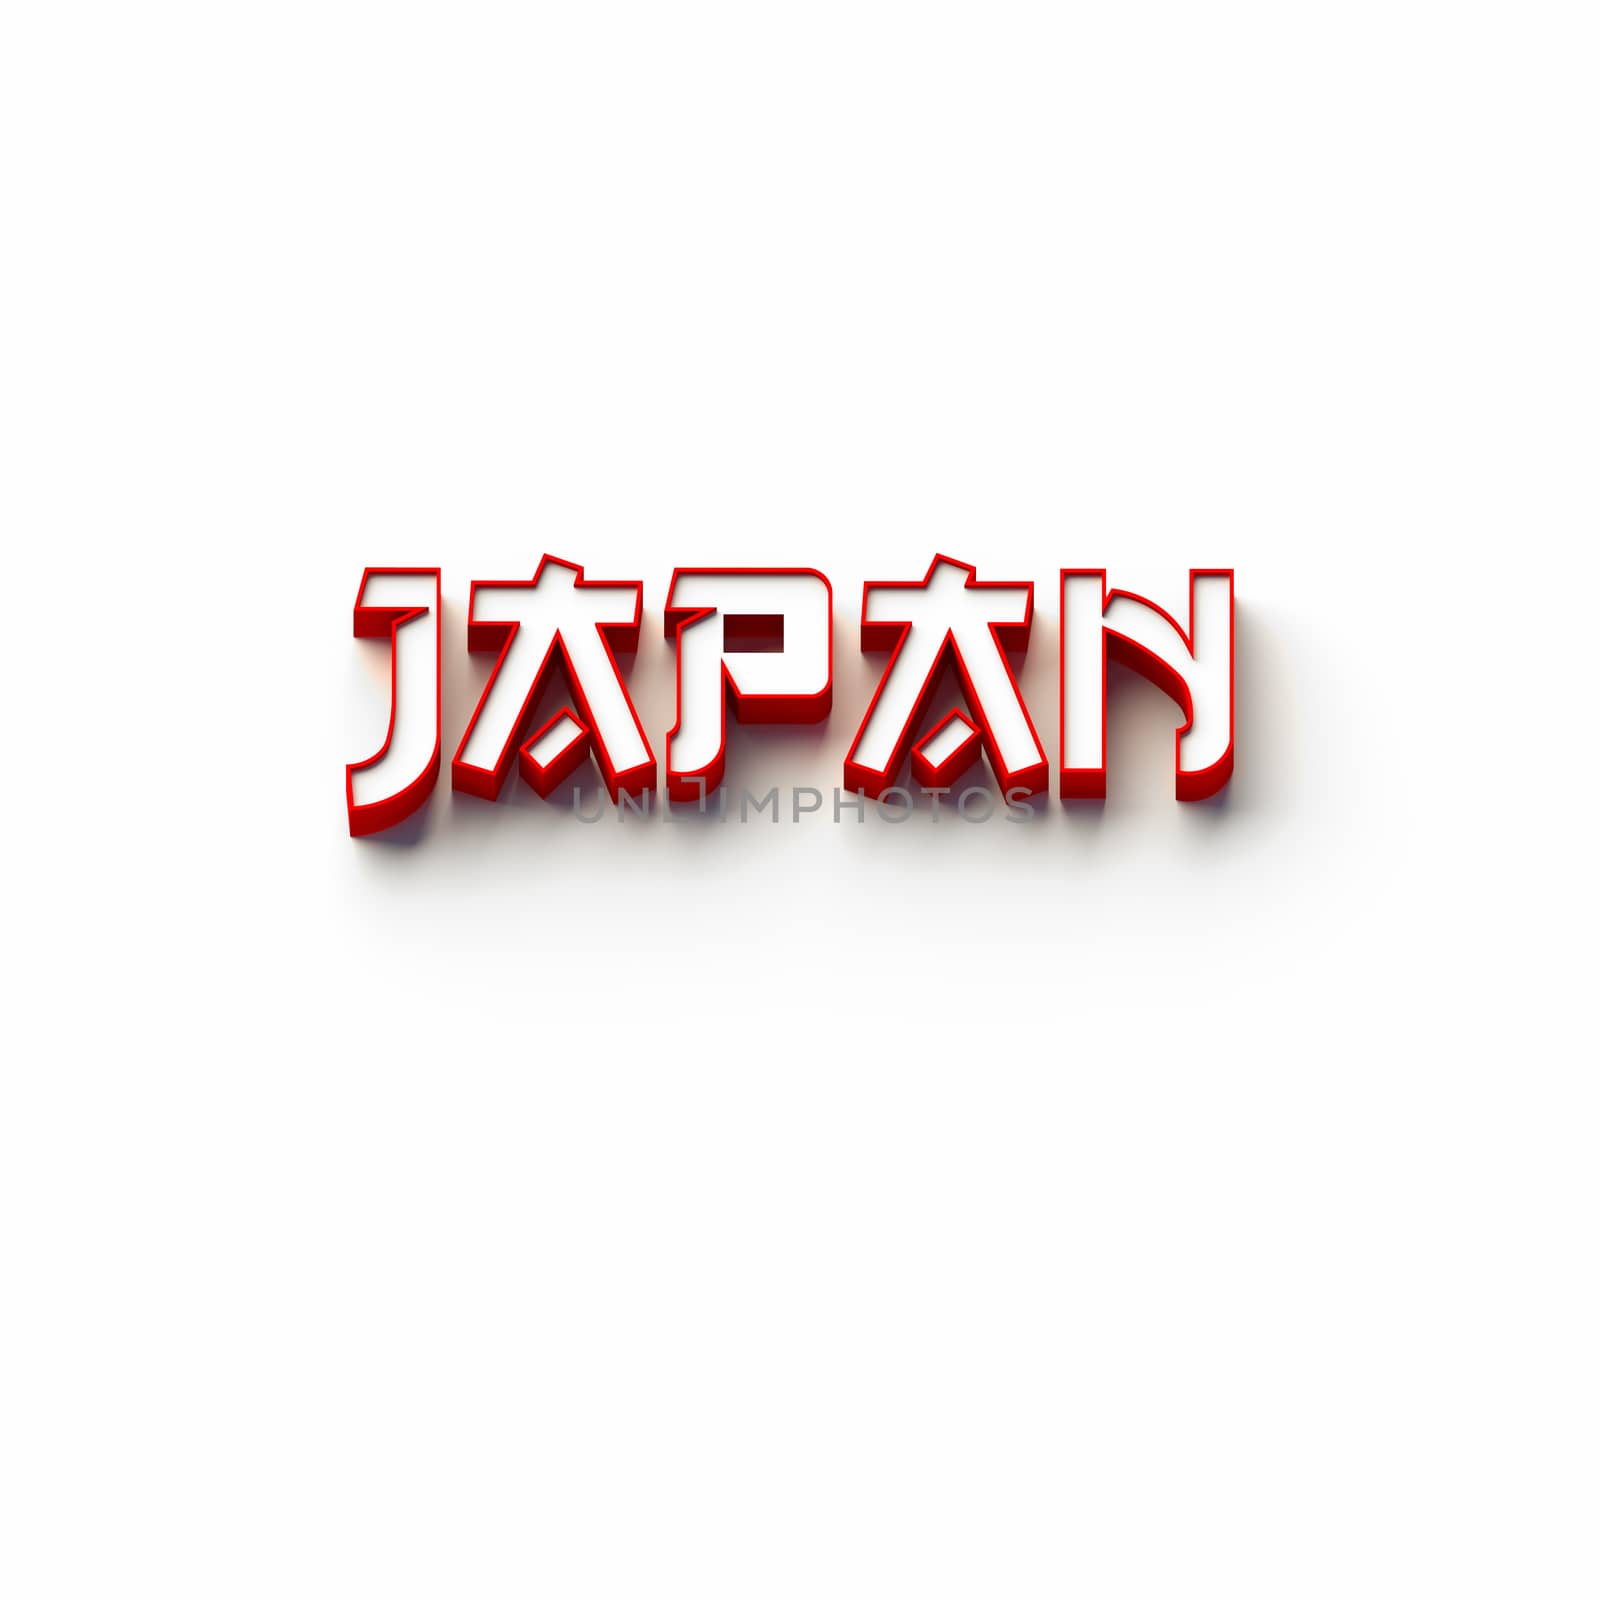 3D RENDERING WORDS 'JAPAN' ON WHITE PLAIN BACKGROUND